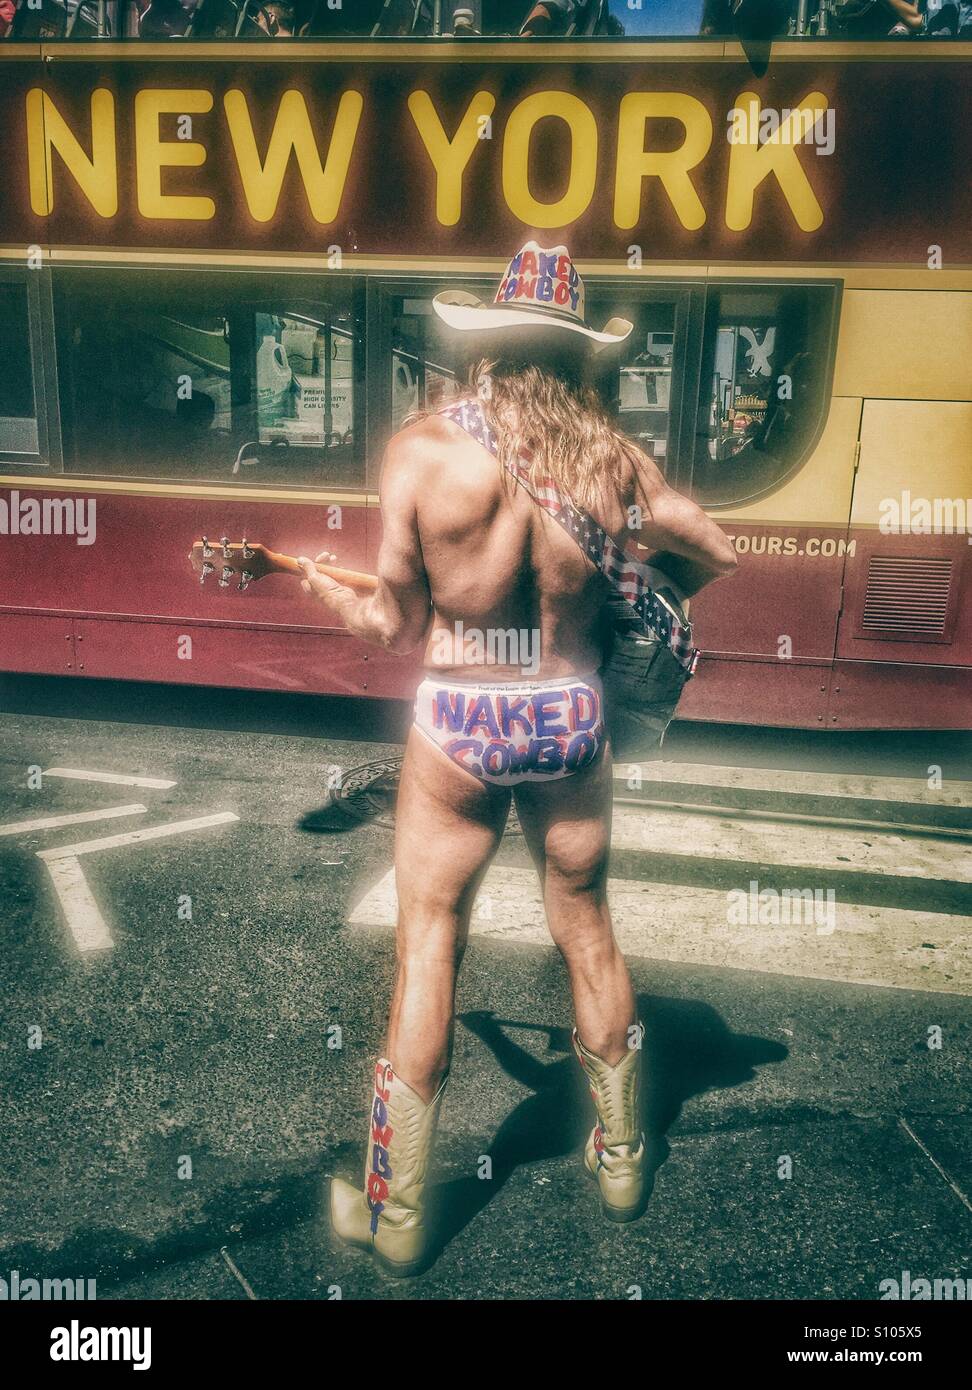 Naked cowboy of New York Stock Photo